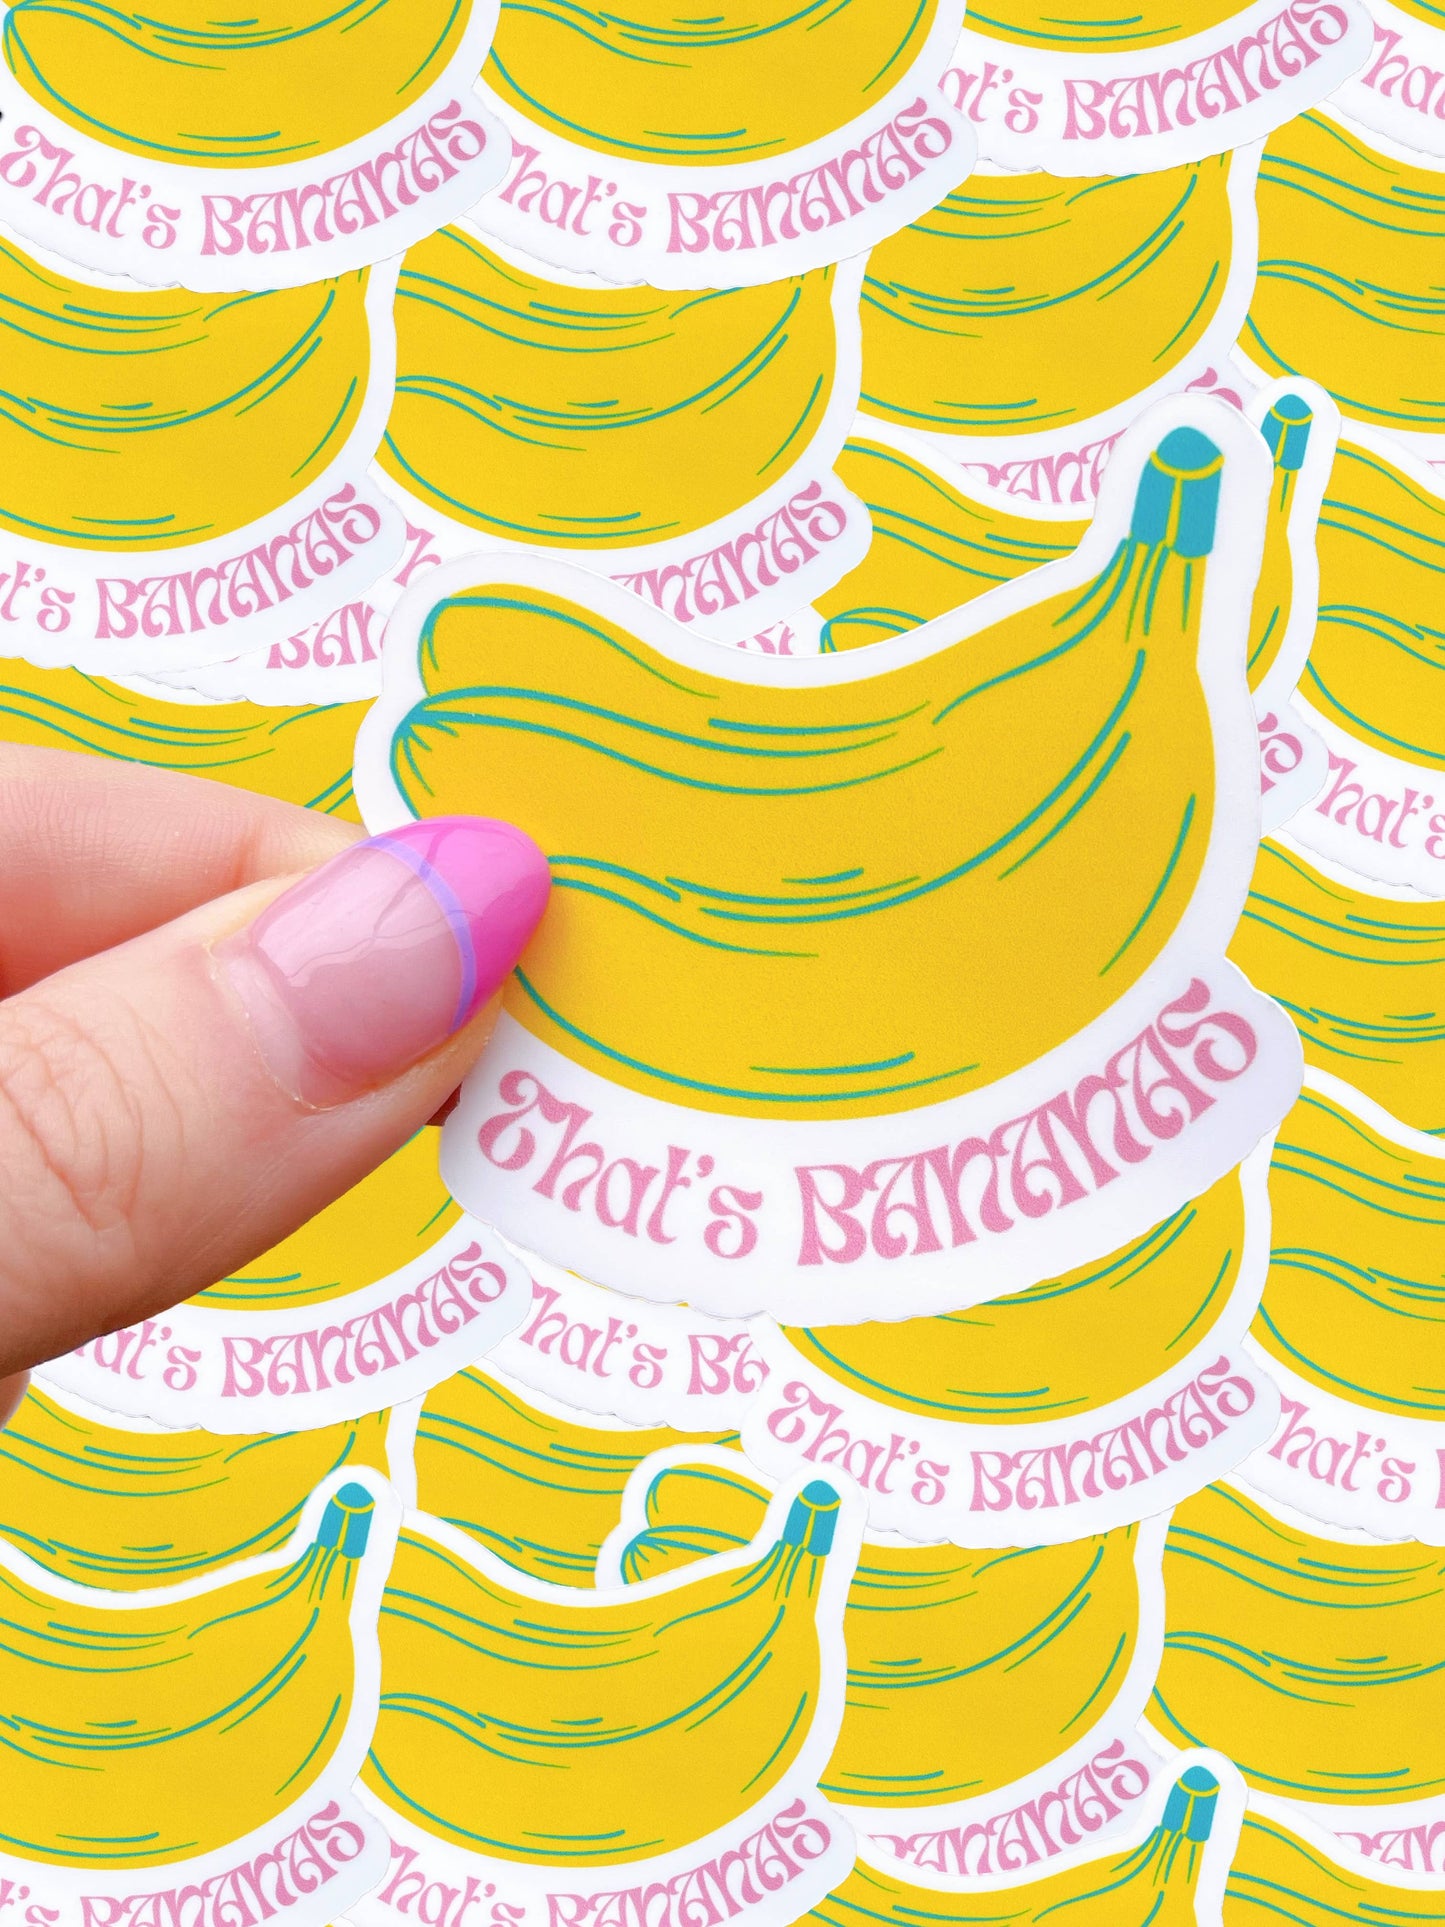 Typo Lettering Co - That’s bananas waterproof sticker